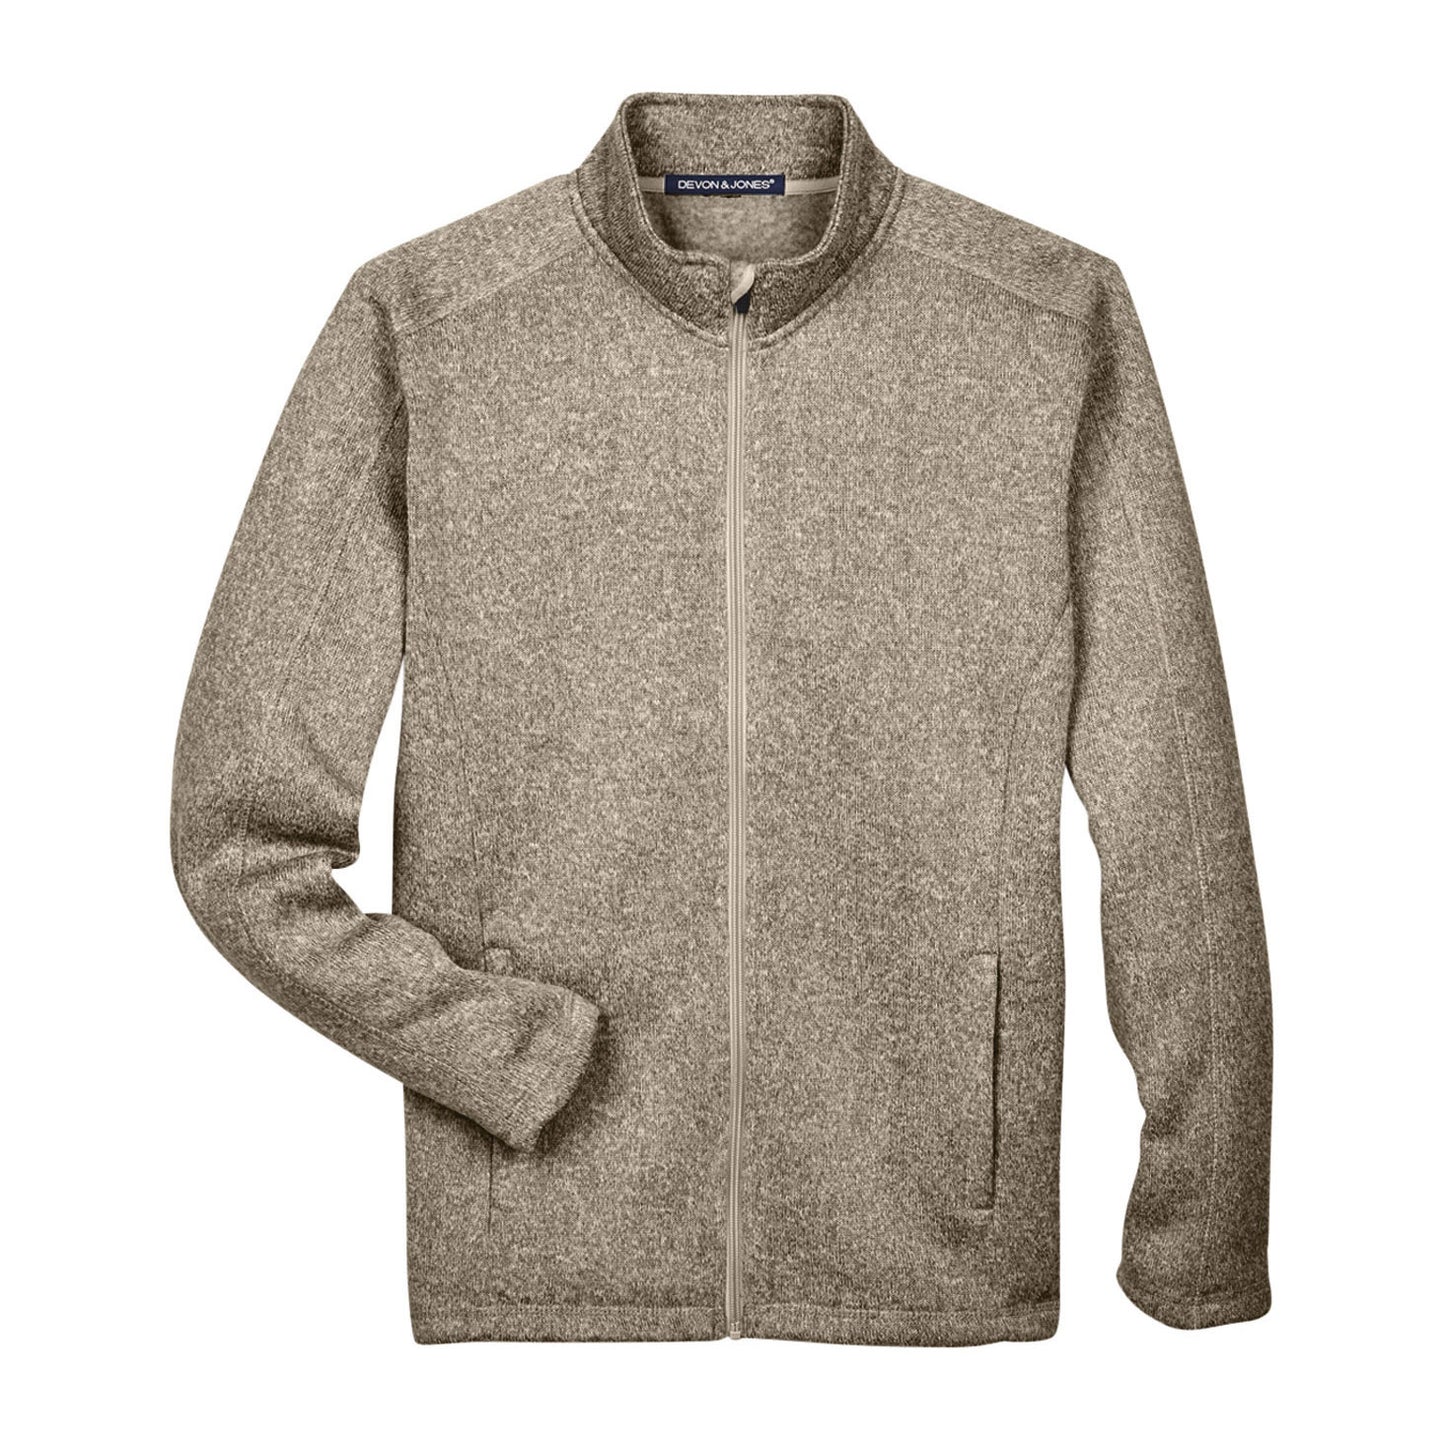 SAMS Sweater - Full-Zip